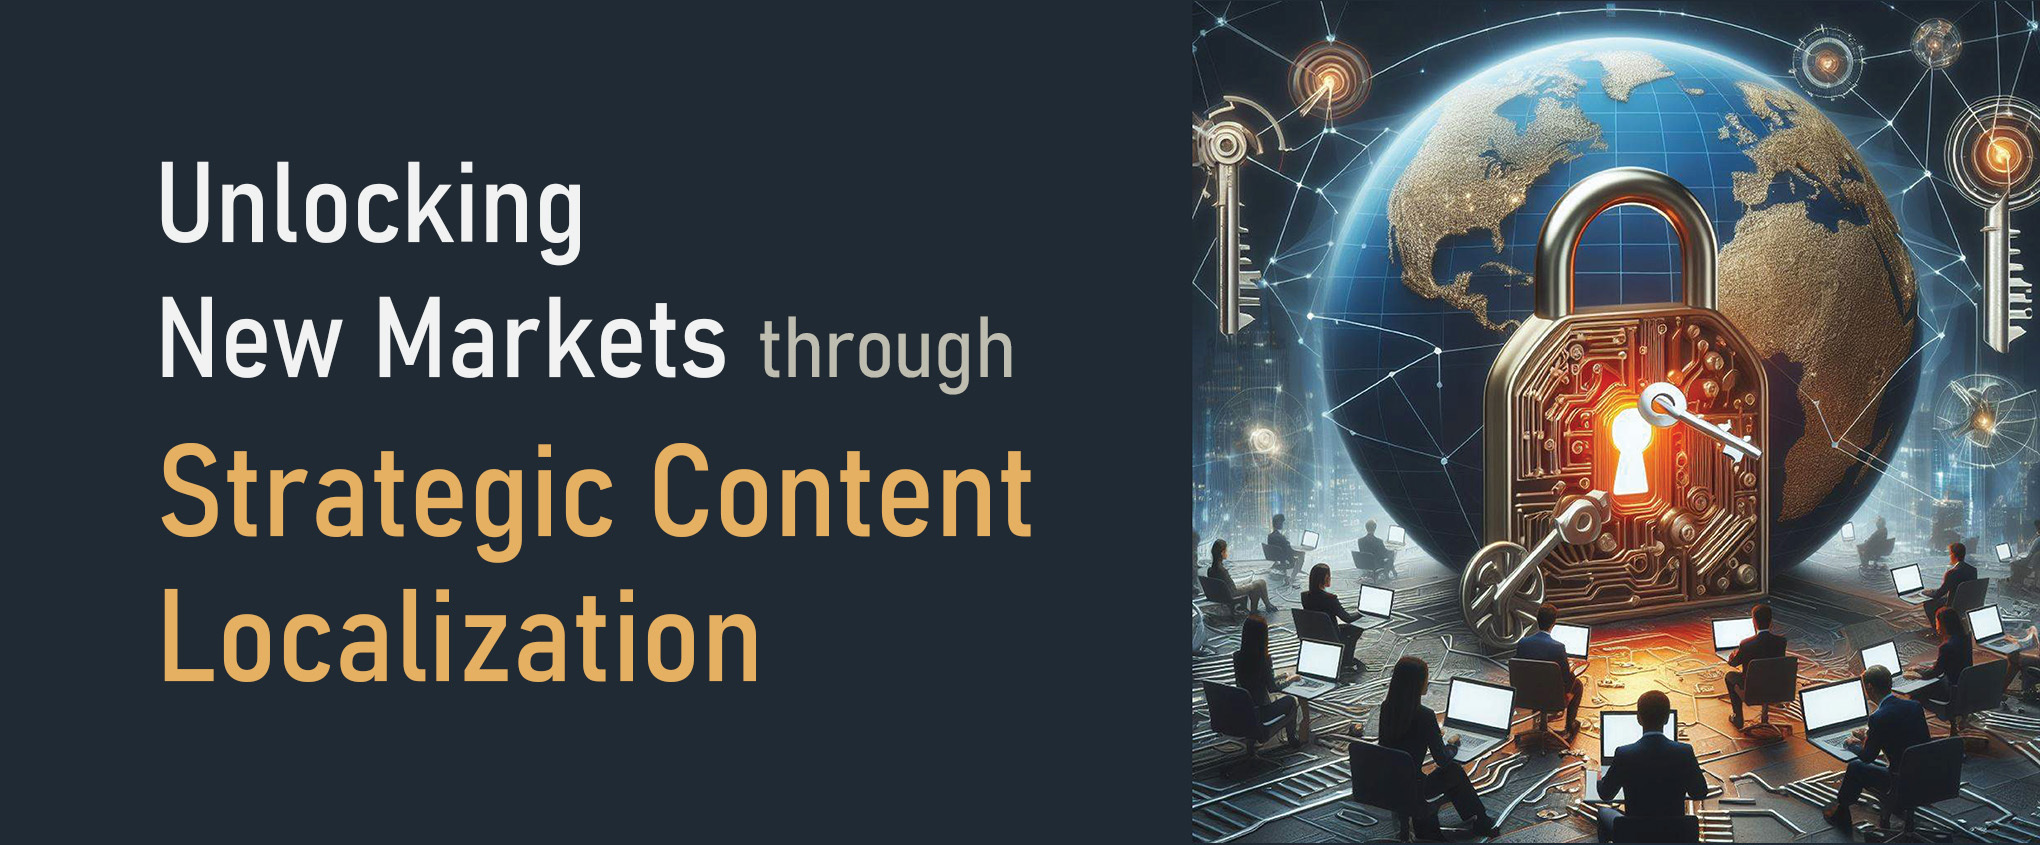 Unlocking New Markets through Strategic Content Localization